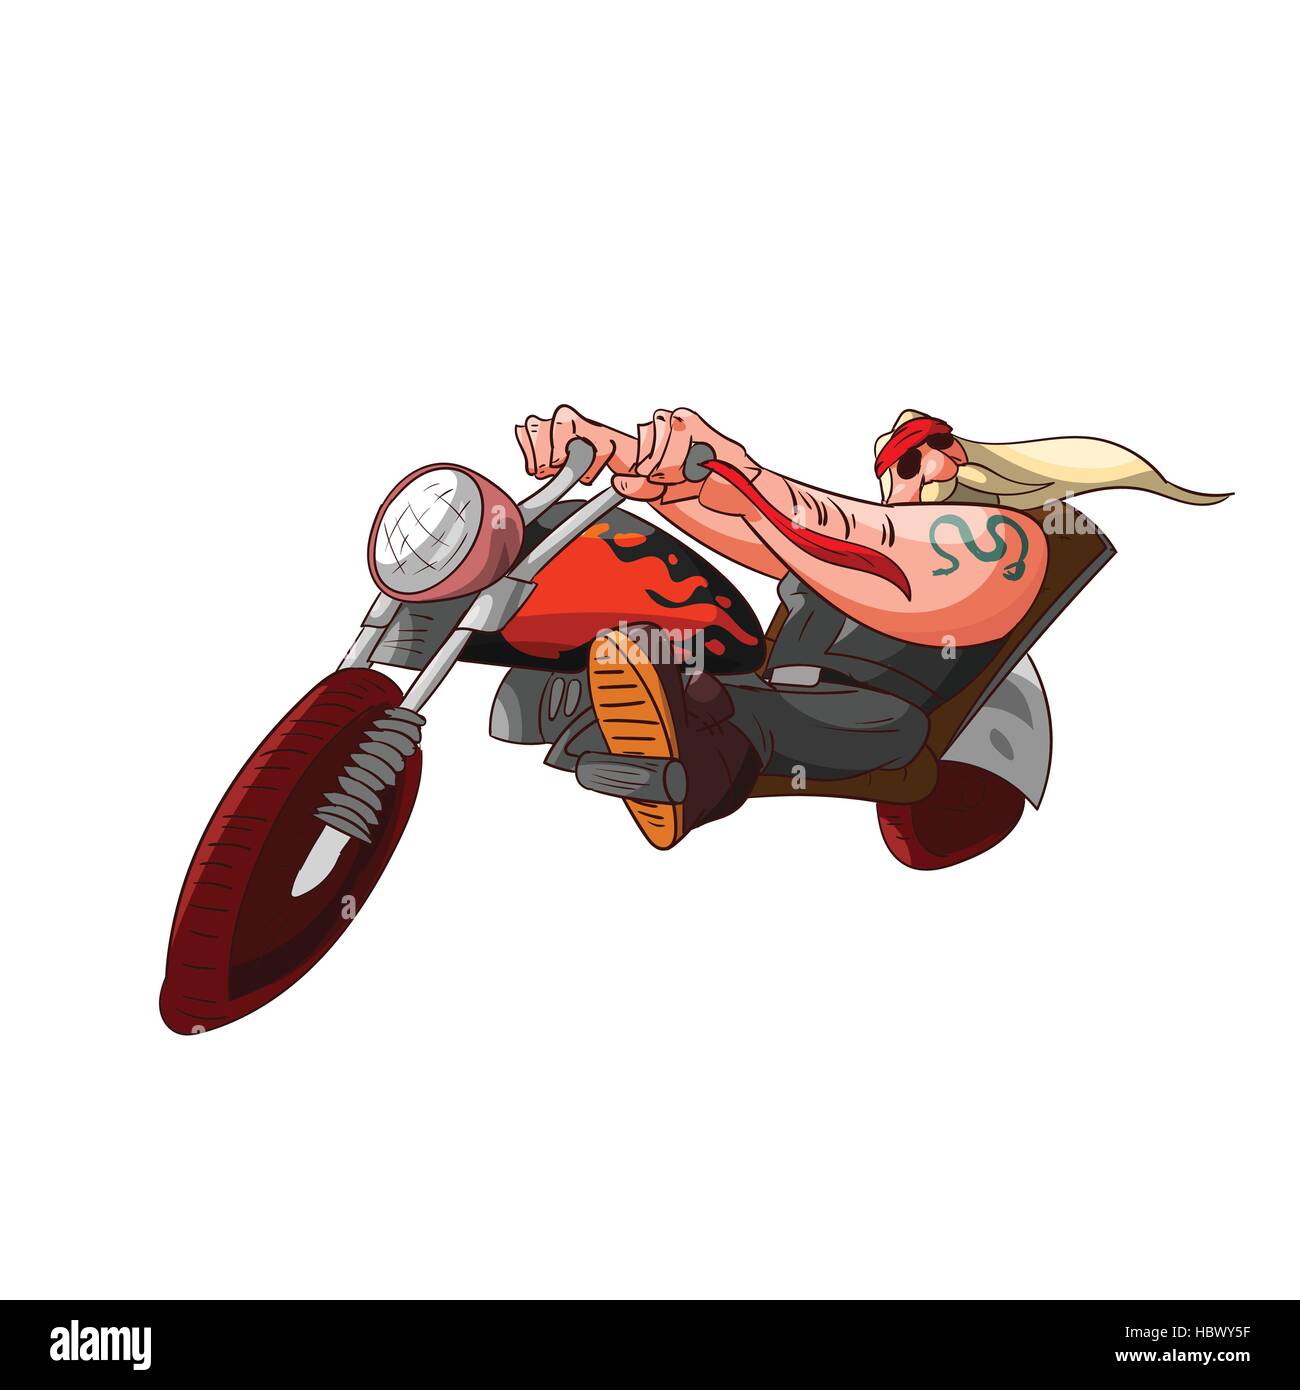 Colorufl Vektor-Illustration Karikatur Rocker, Biker oder Bande Mitglied Stock Vektor